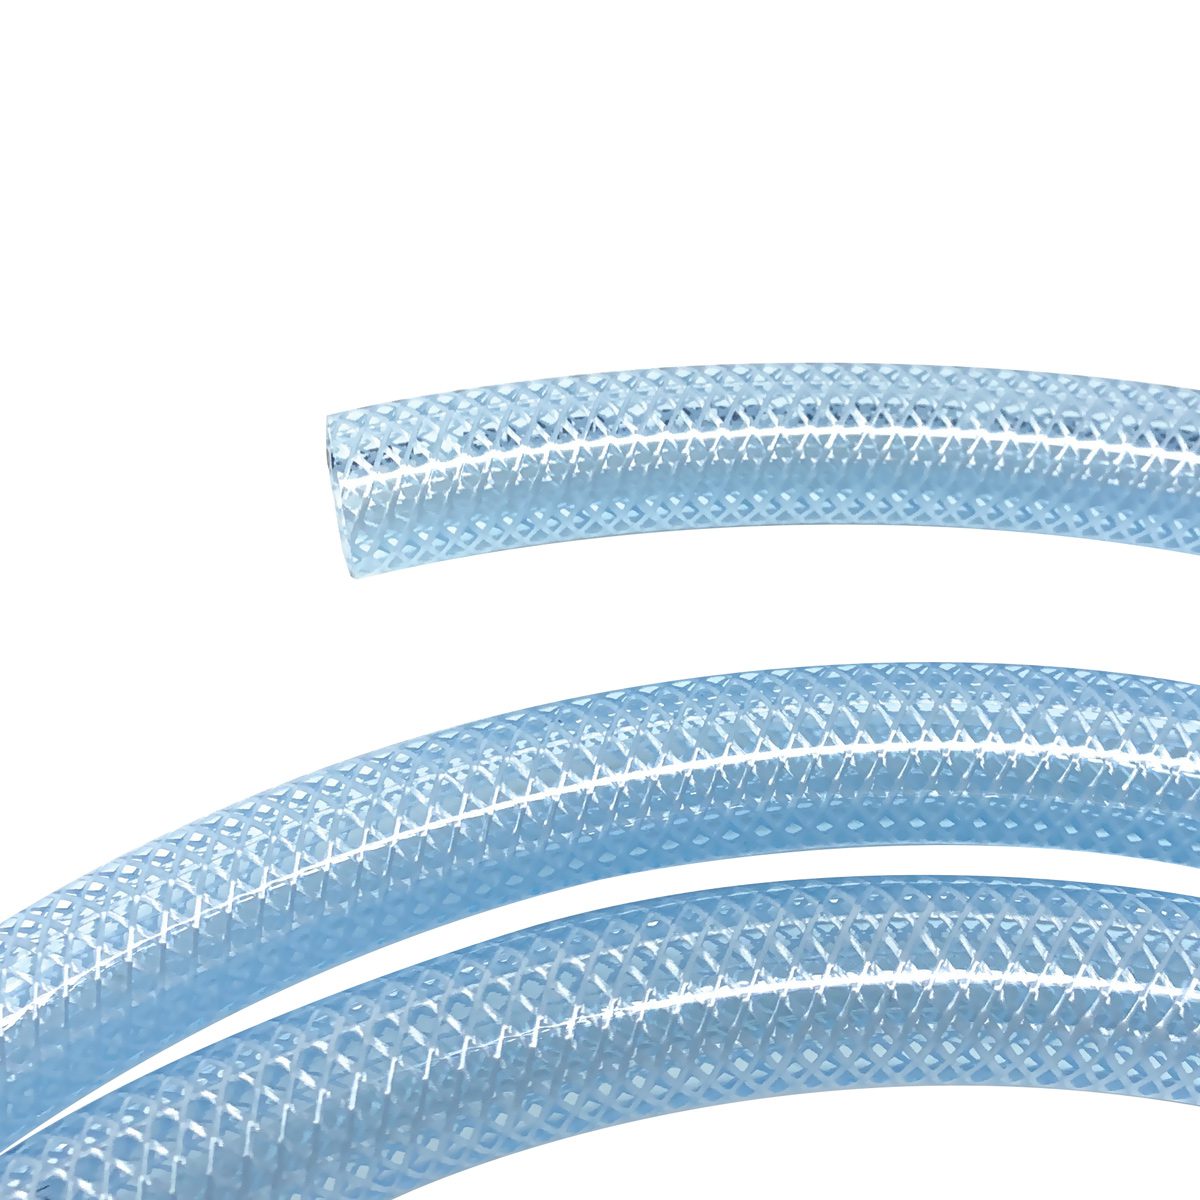 Gloxco Clear Braided PVC Tube, Food Grade Hose, 1/2 ID, 100 Ft Length